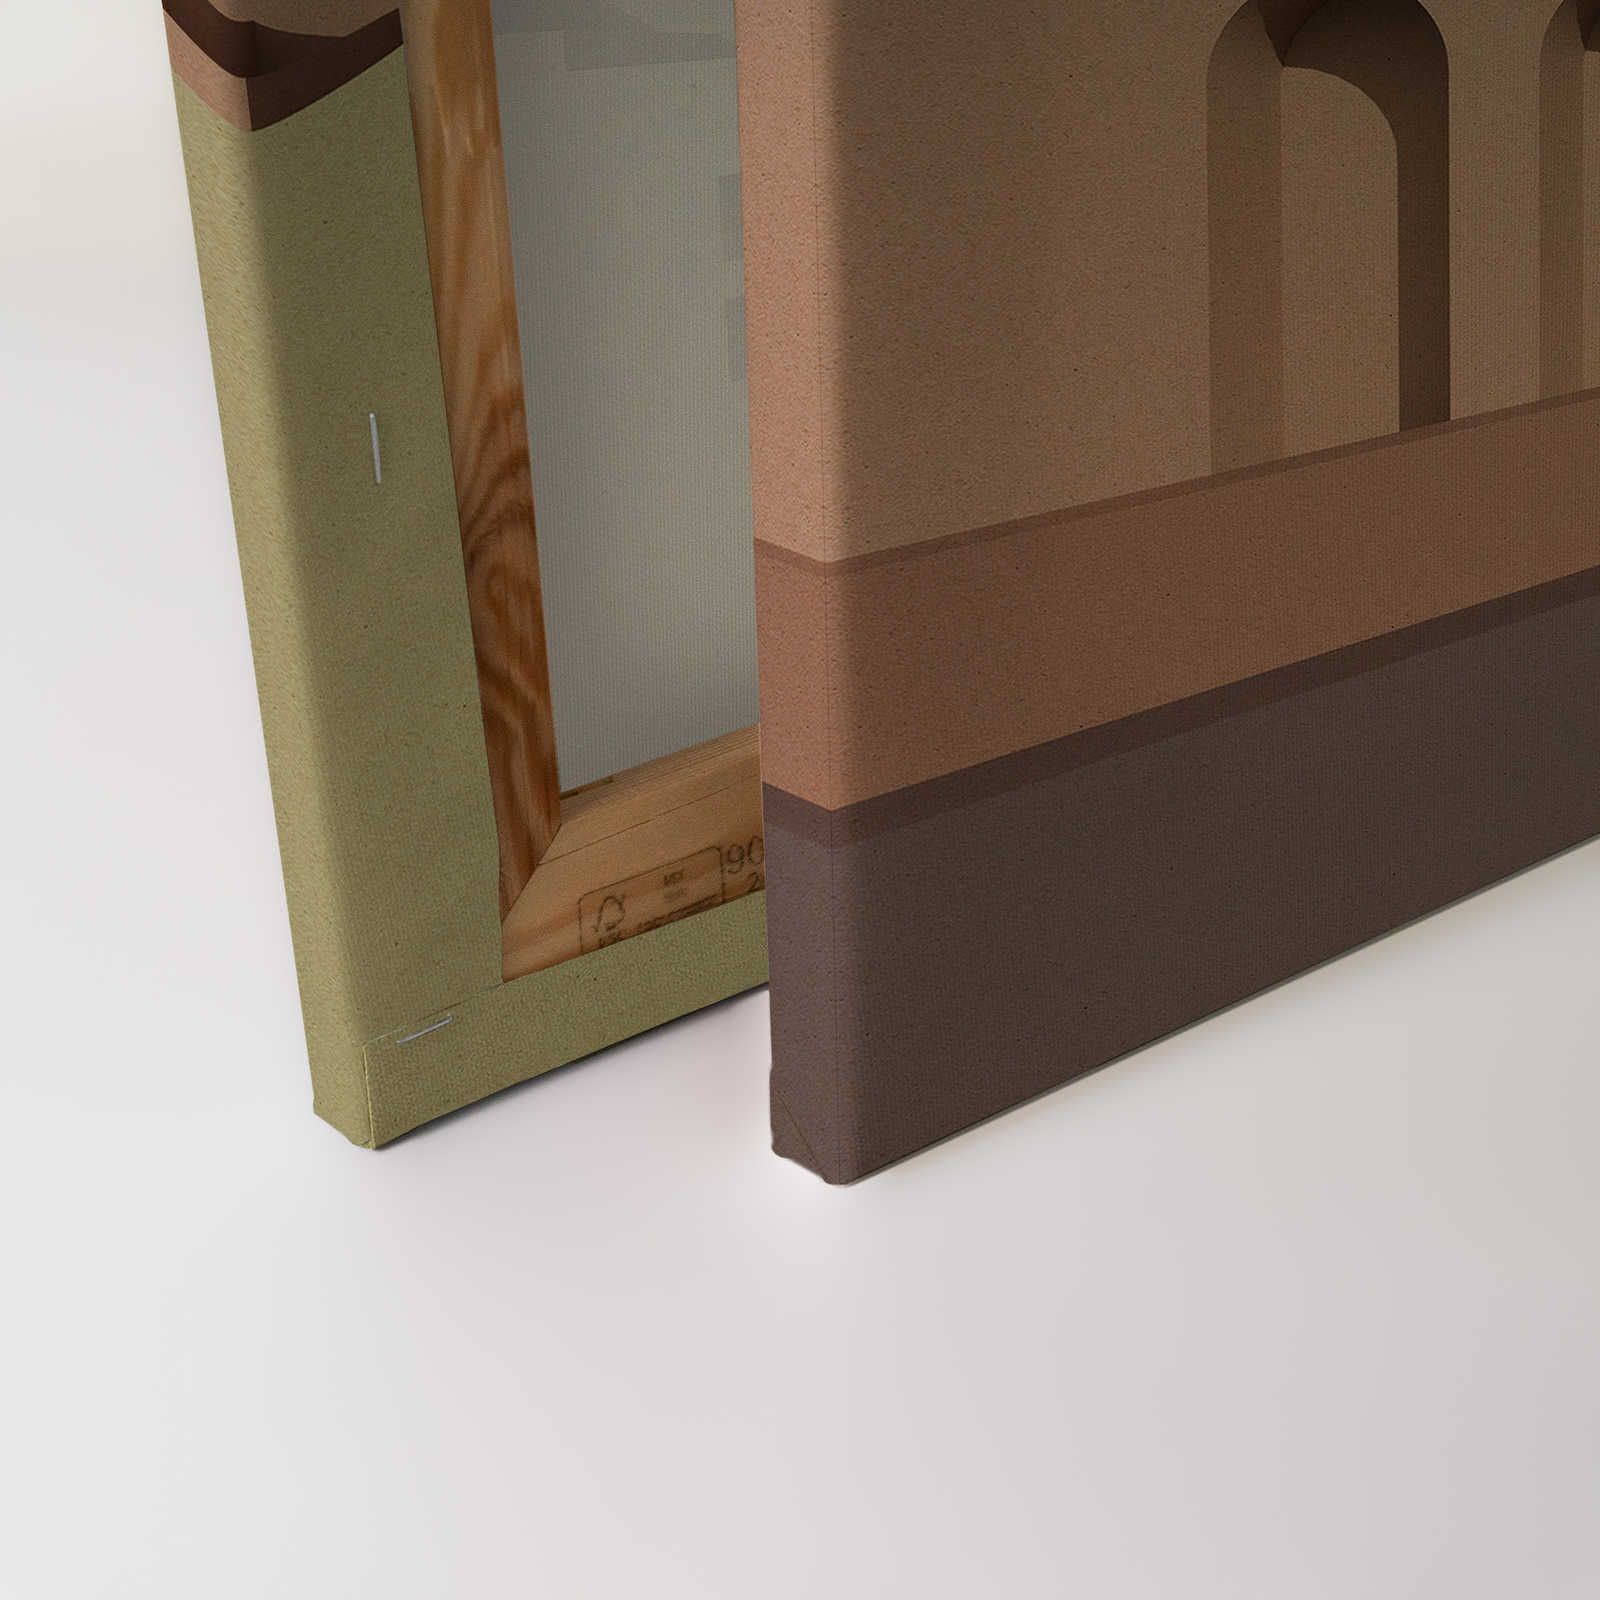             Tanger 2 - Leinwandbild Architektur Dessert Design abstrakt – 0,90 m x 0,60 m
        